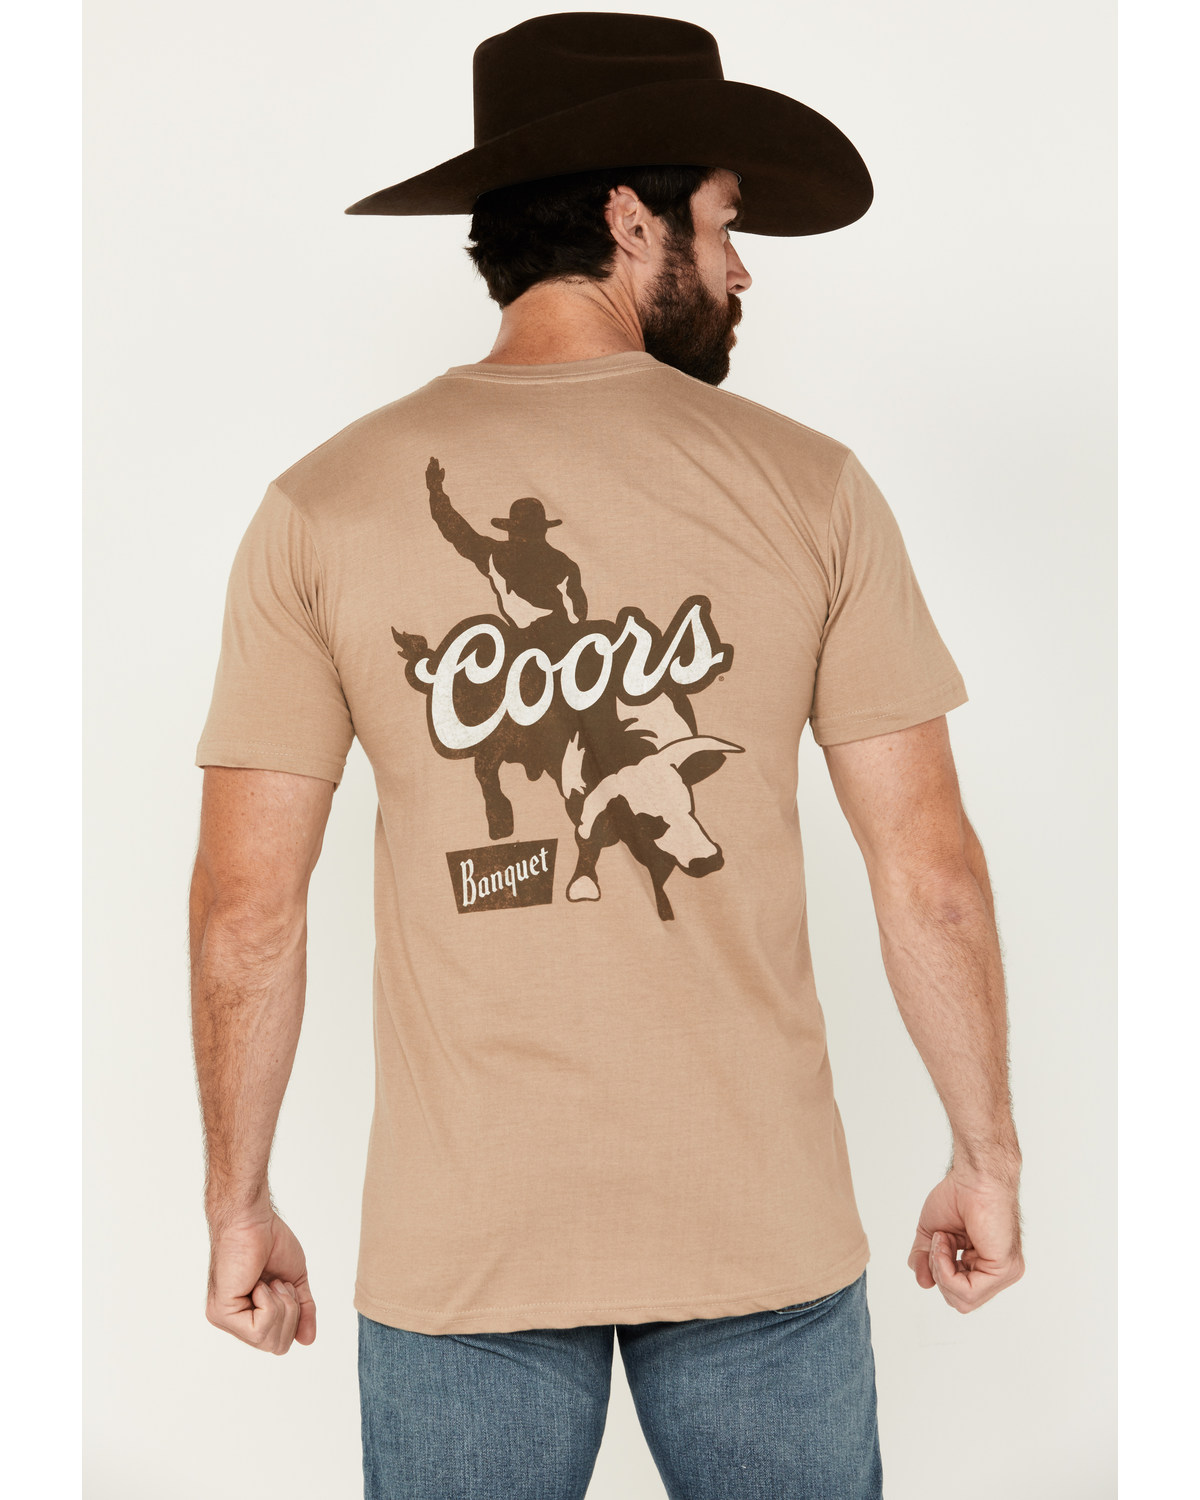 Changes Men's Coors Banquet Bull Rider Short Sleeve Graphic T-Shirt